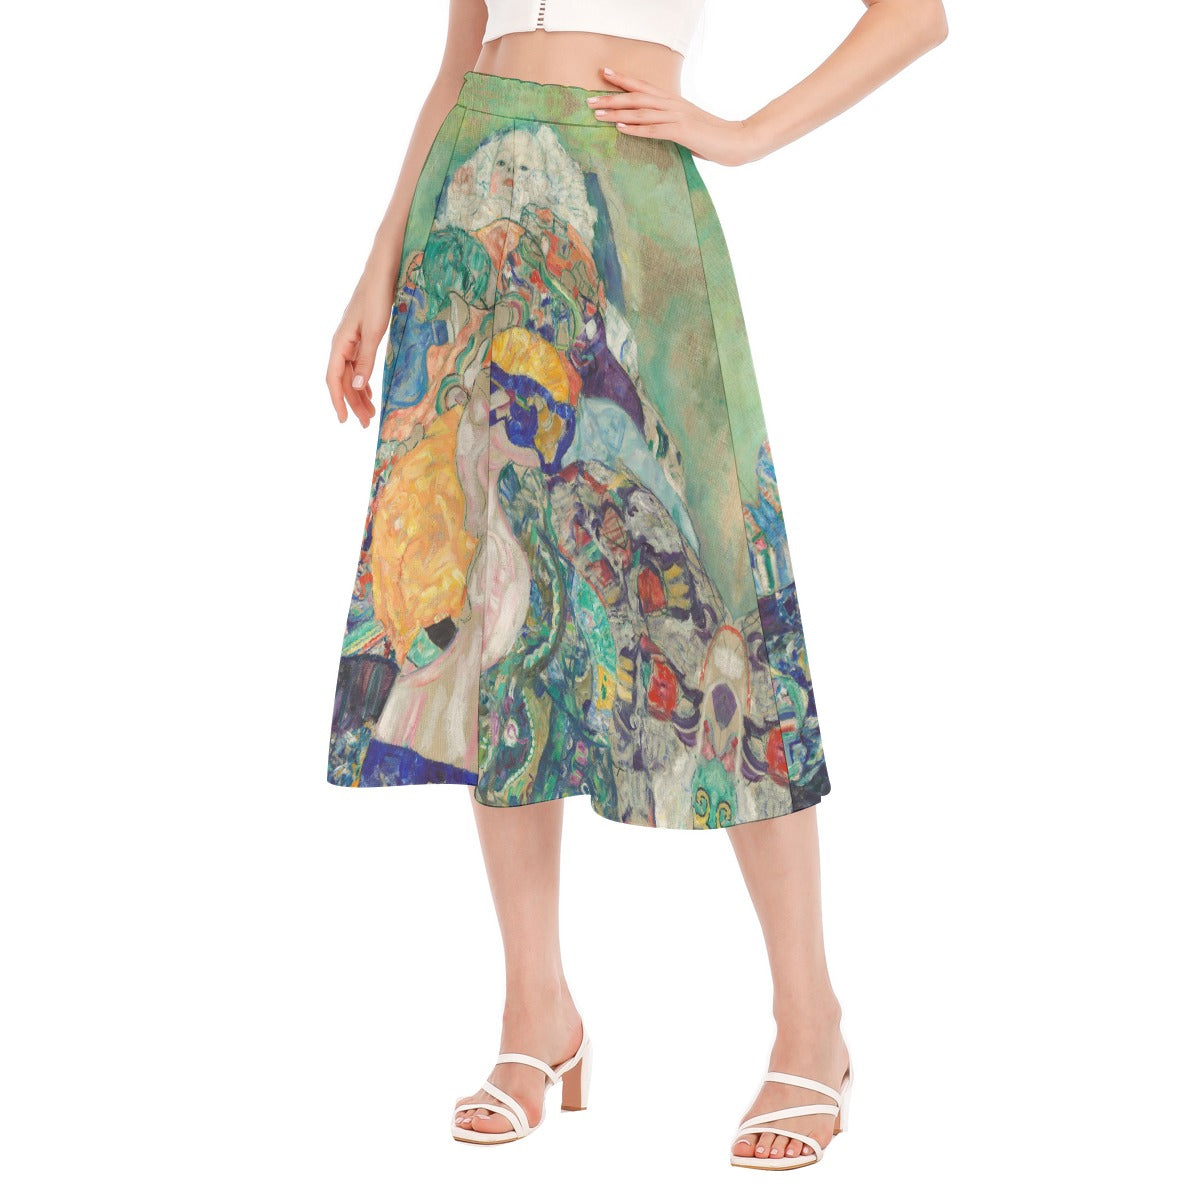 Close-up of high-resolution digital print on chiffon skirt